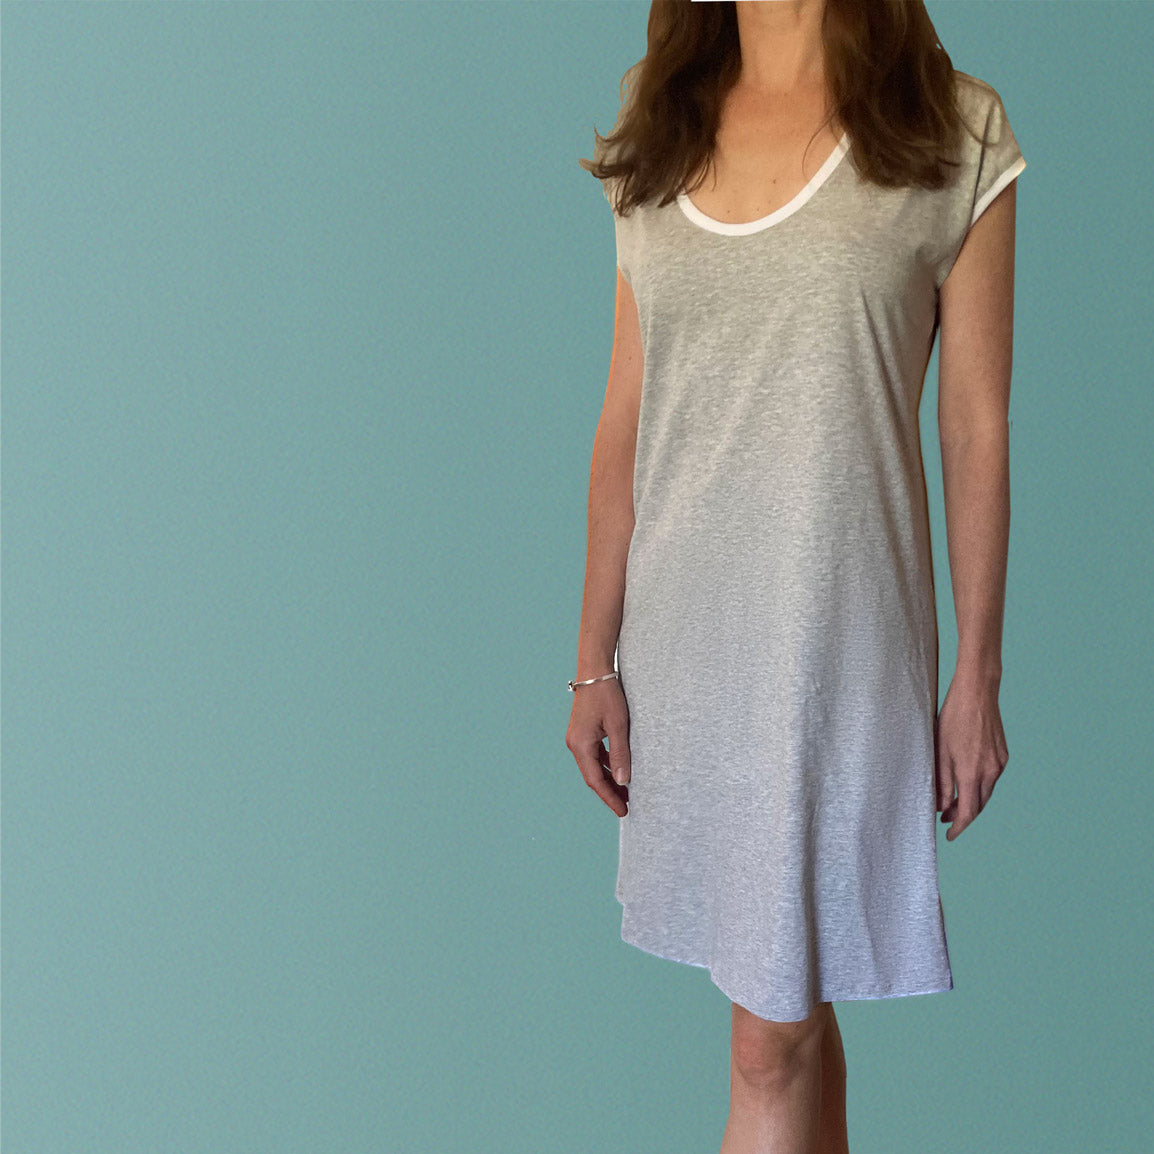 Organic cotton nighties Australia. Summer nightgown. Grey short nightgown with round neck and white trim. 